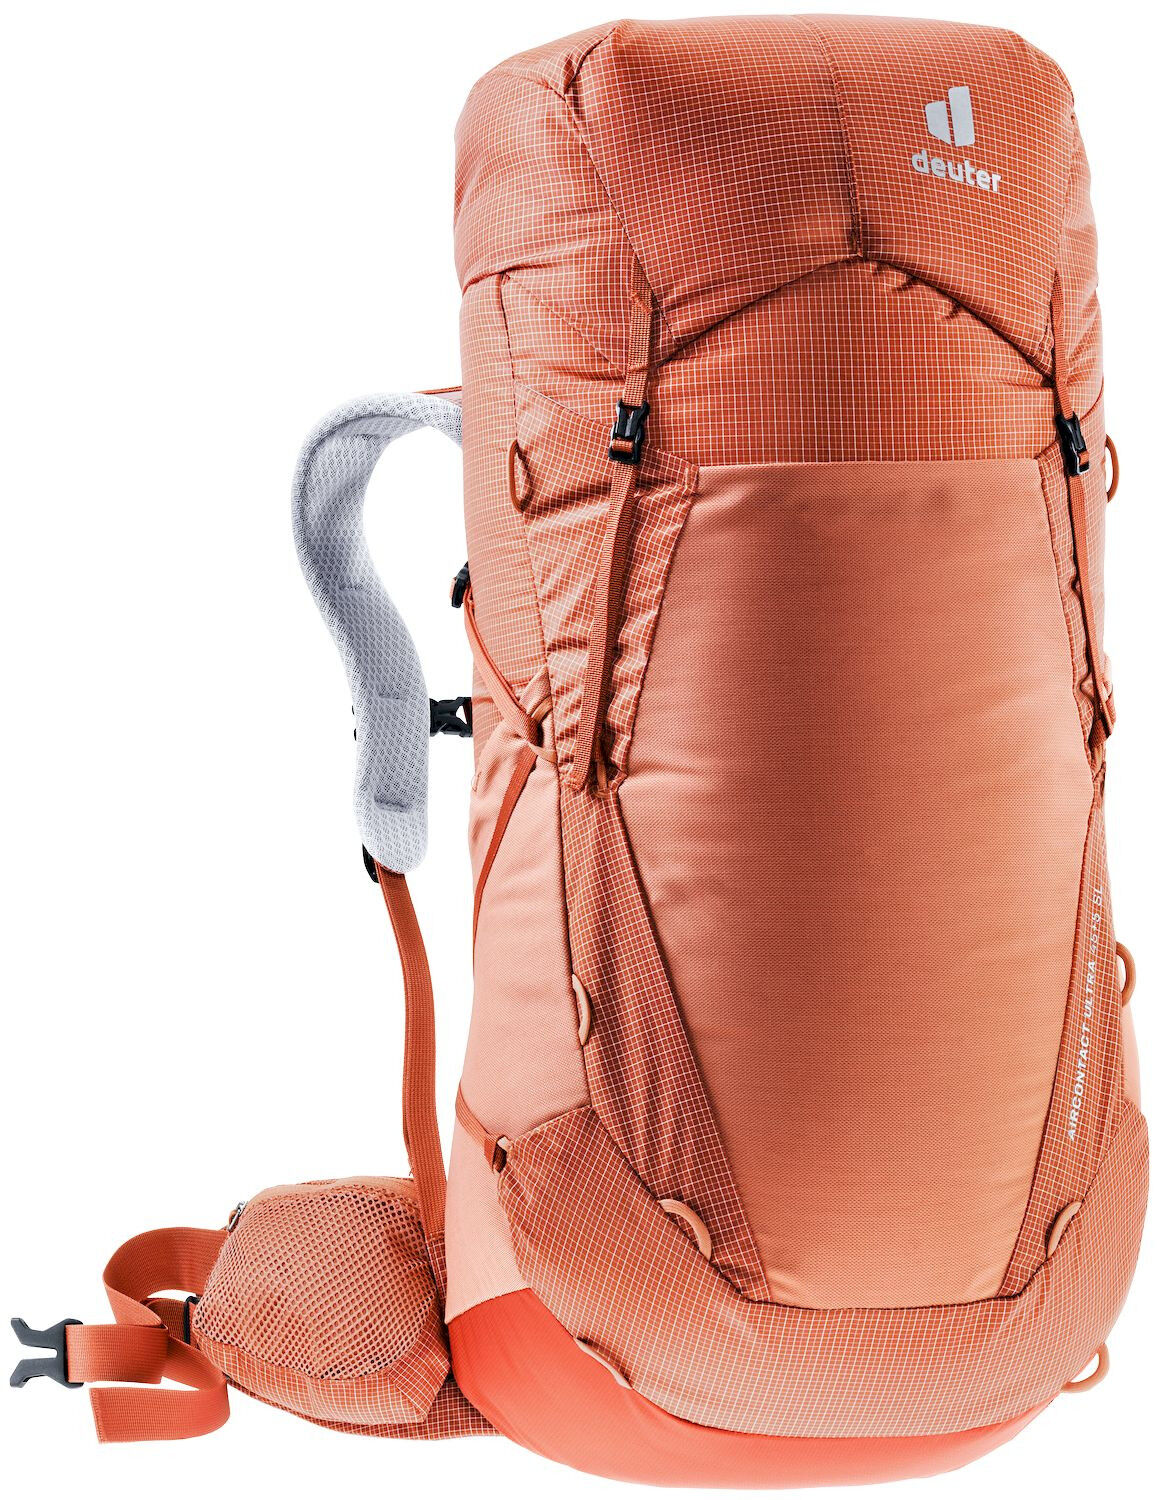 Deuter Aircontact Ultra 45+5 SL - Hiking backpack - Women's